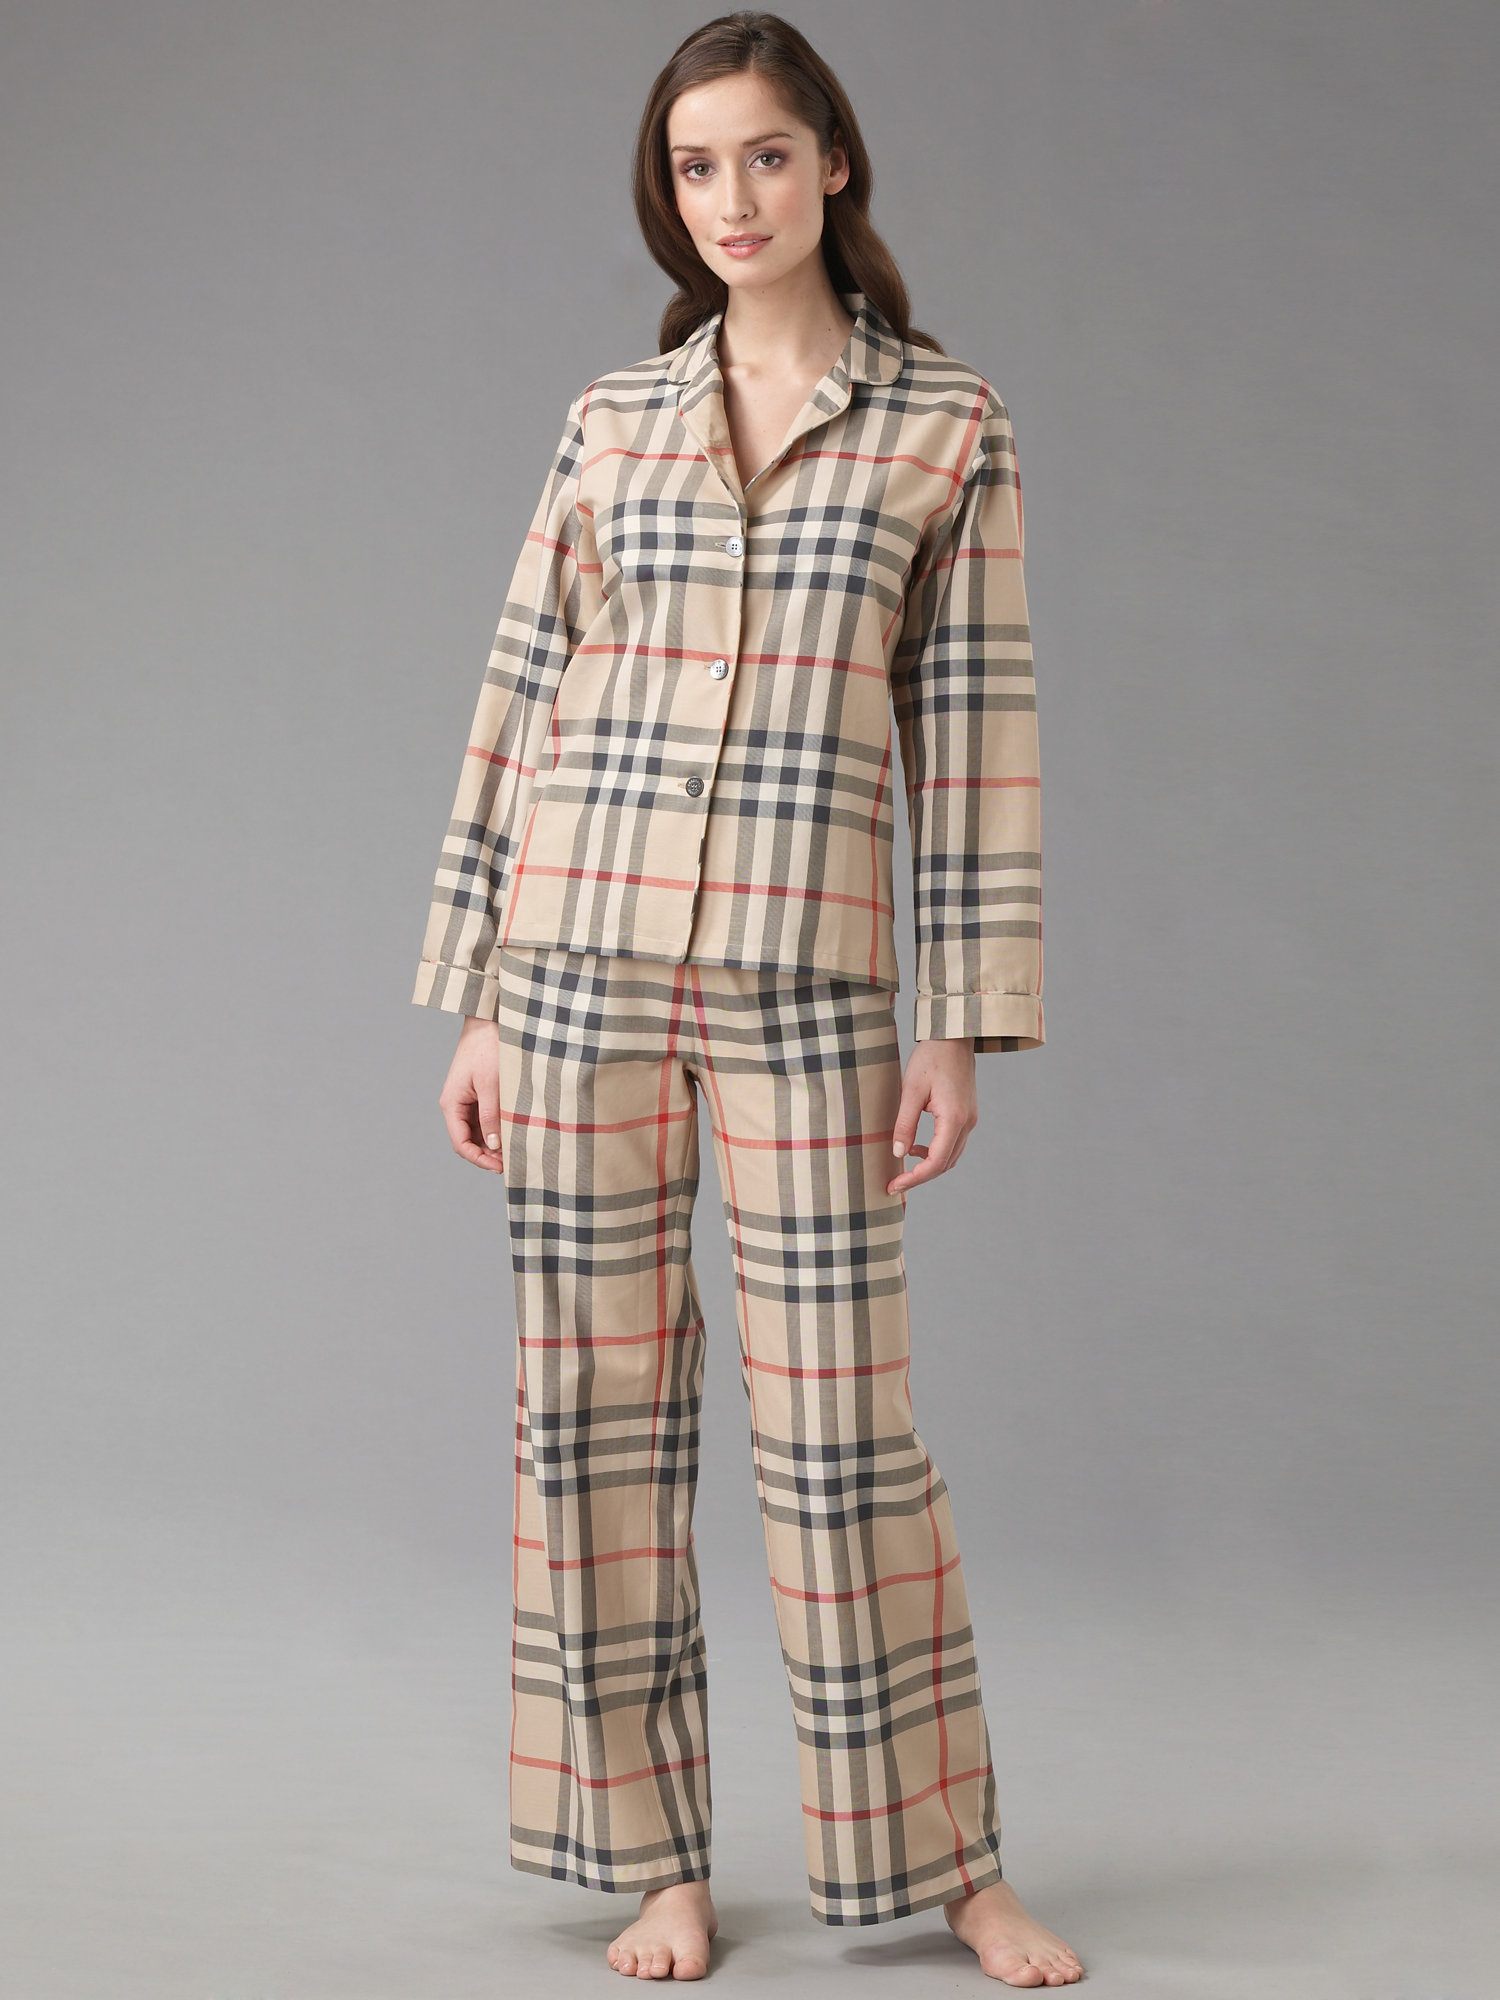 burberry women's pajama set